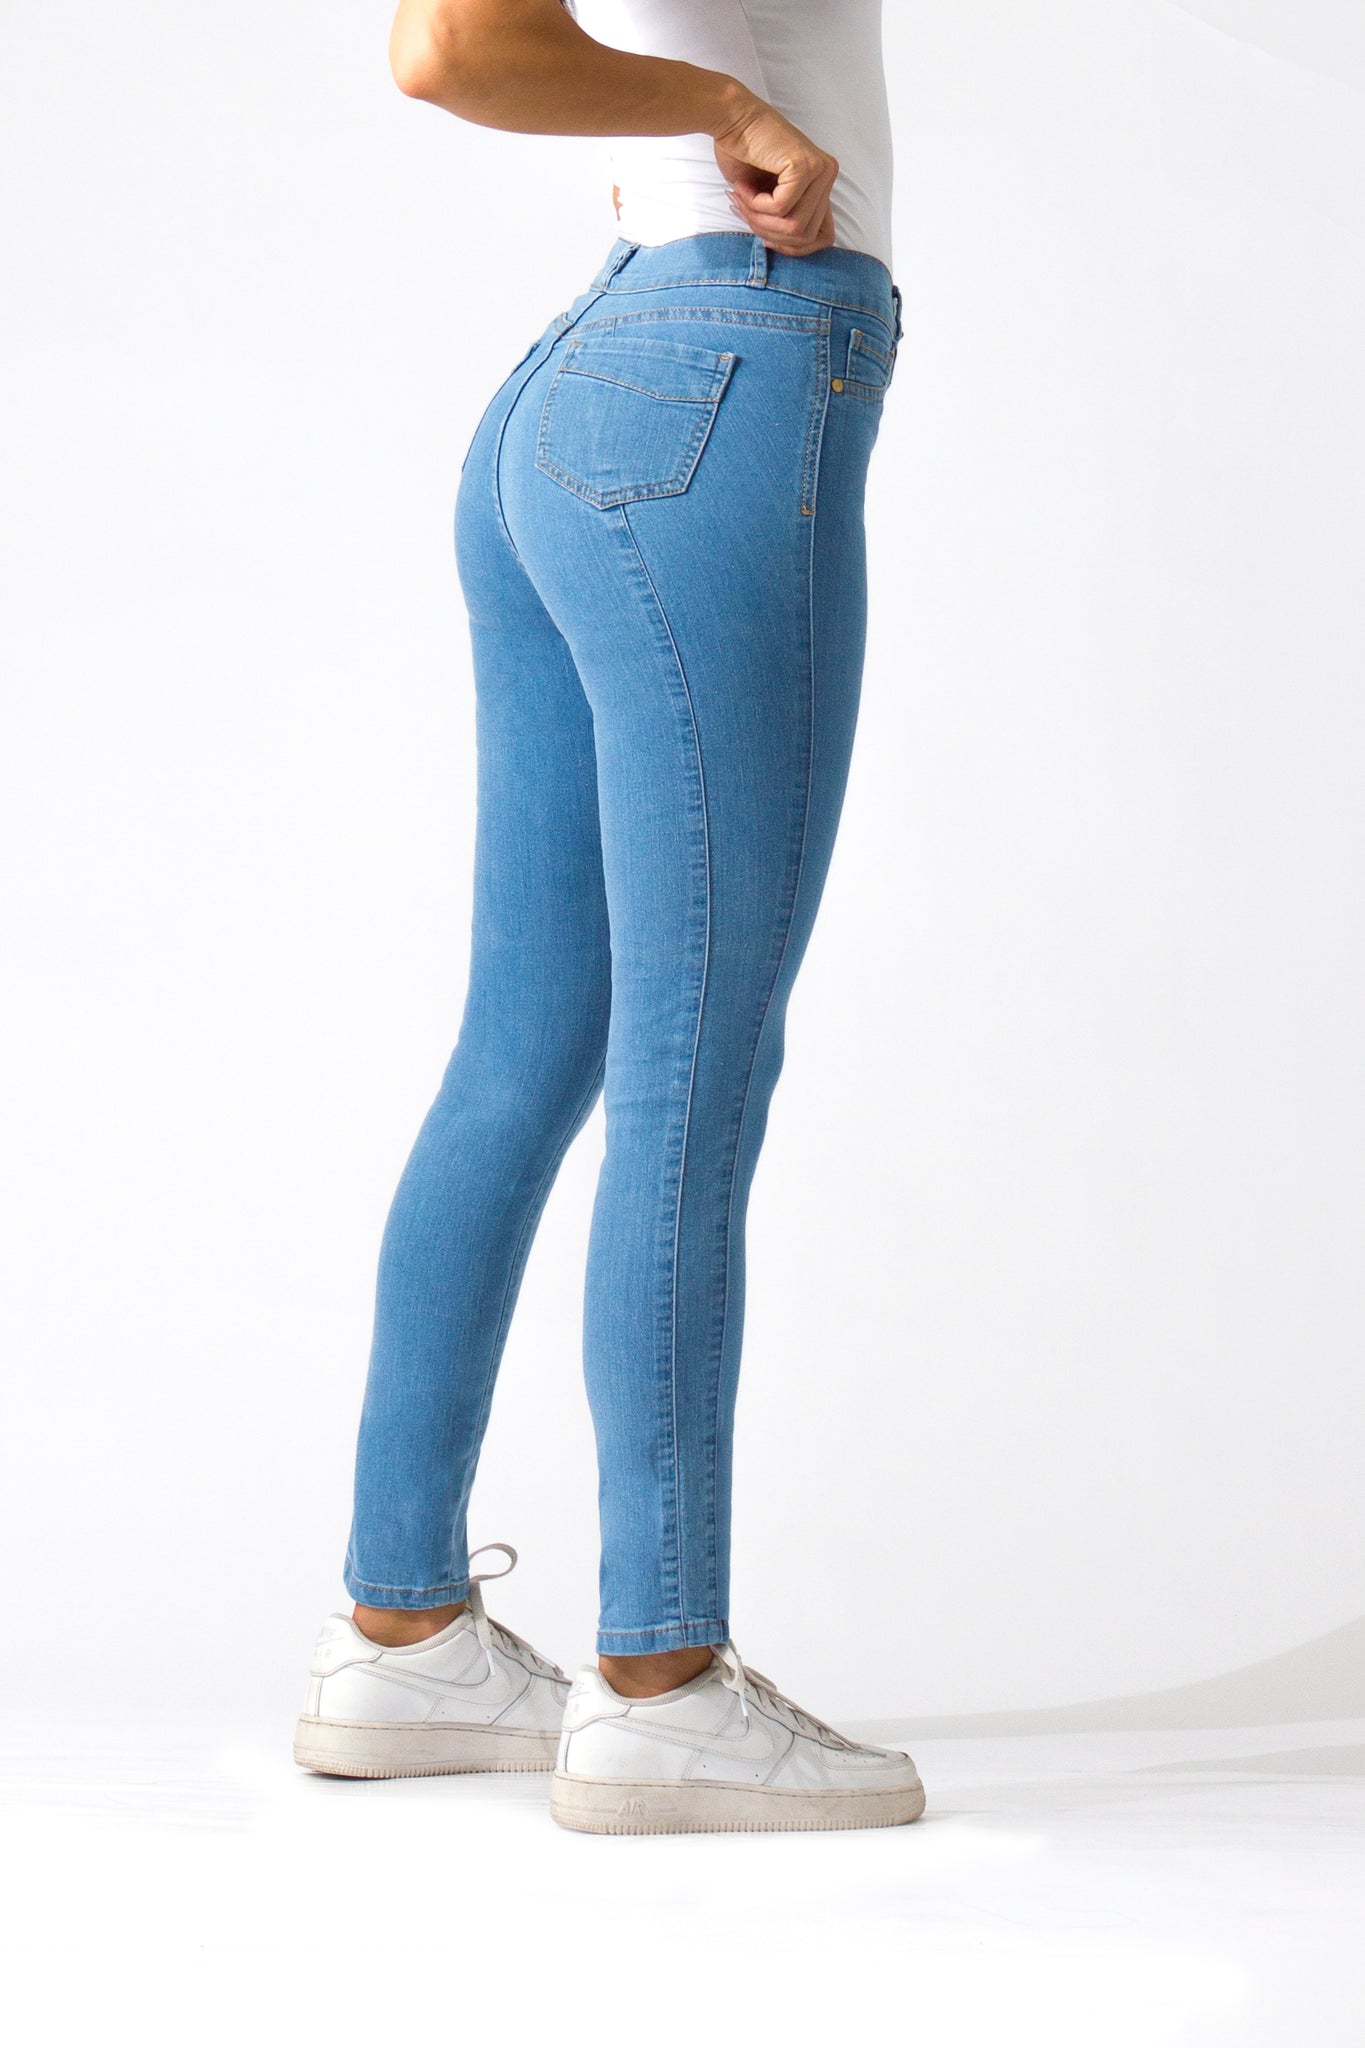 OHPOMP!® Basics, Cintura Media Skinny Jeans Azul Claro D1010